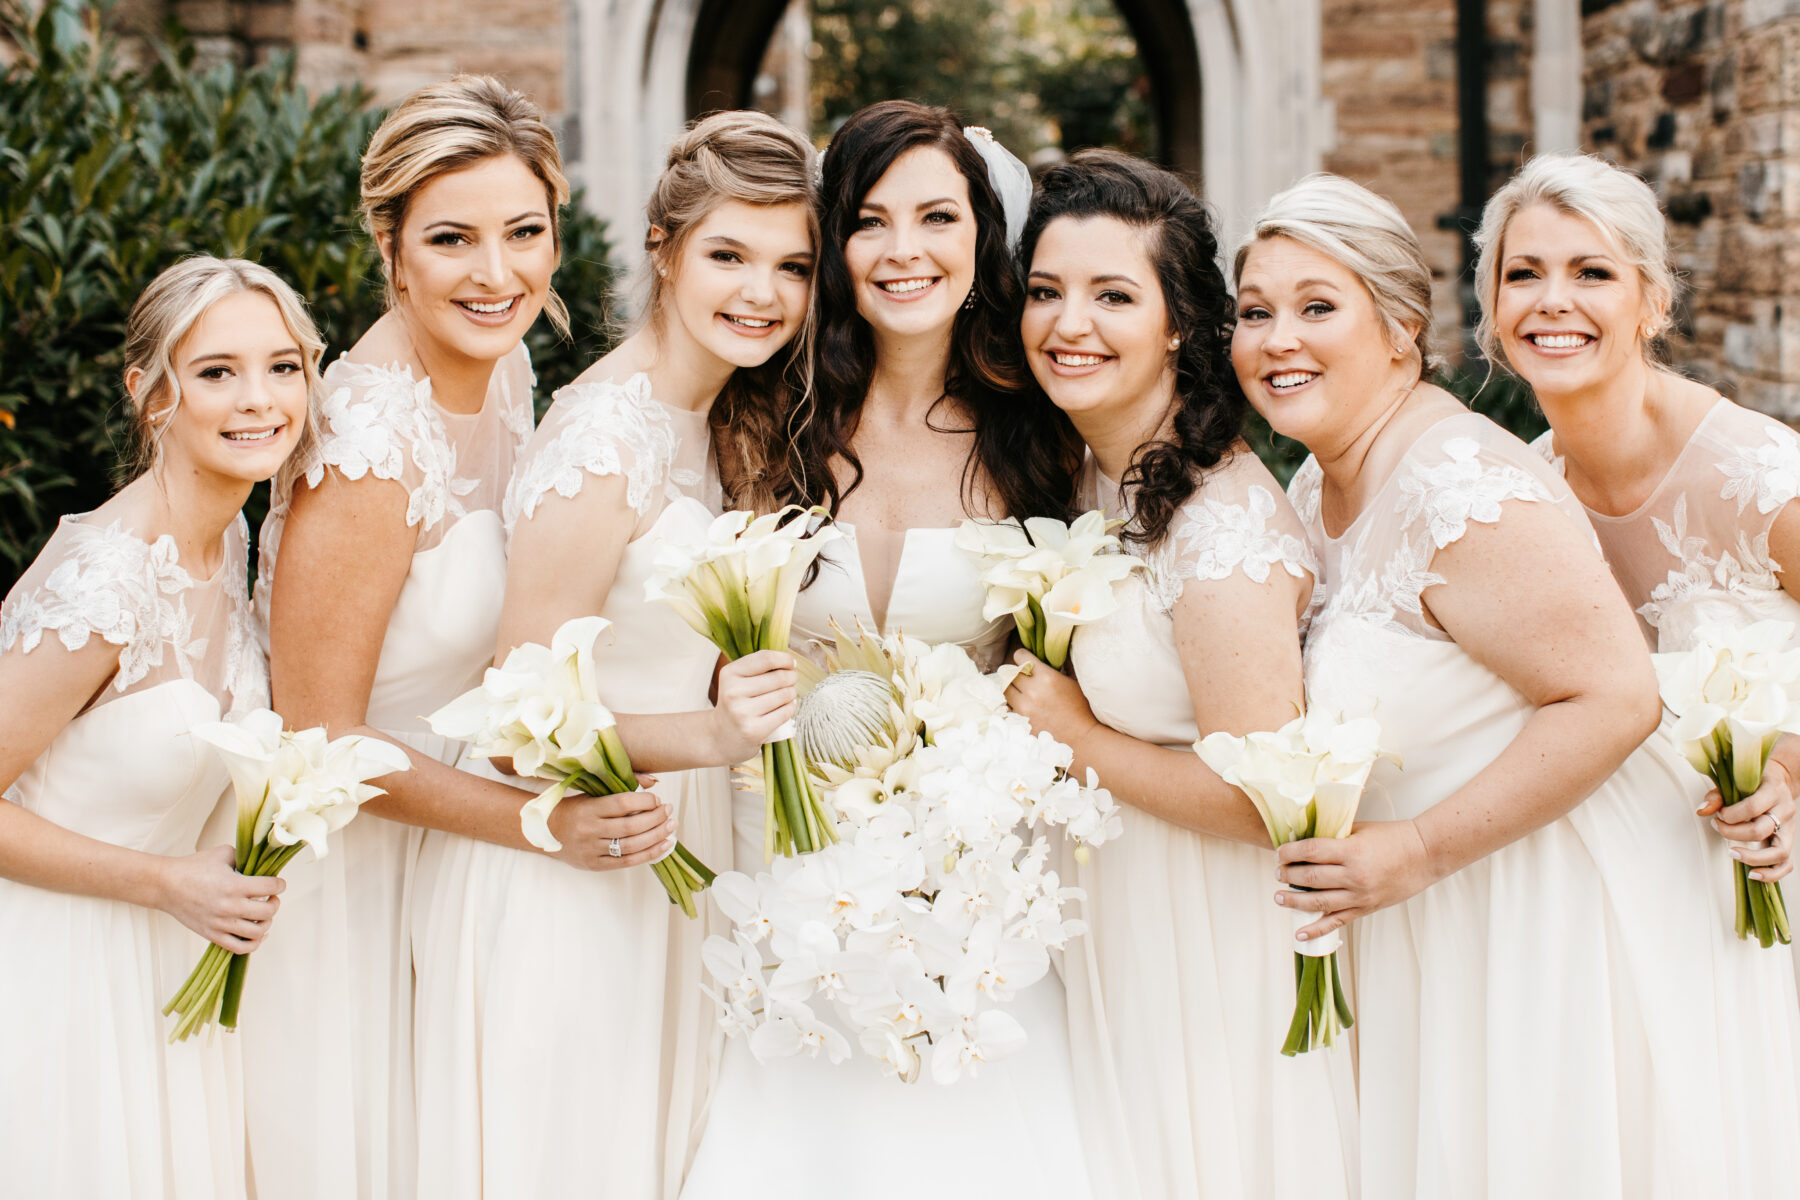 Nashville wedding bouquet by LMA Designs | Nashville Bride Guide